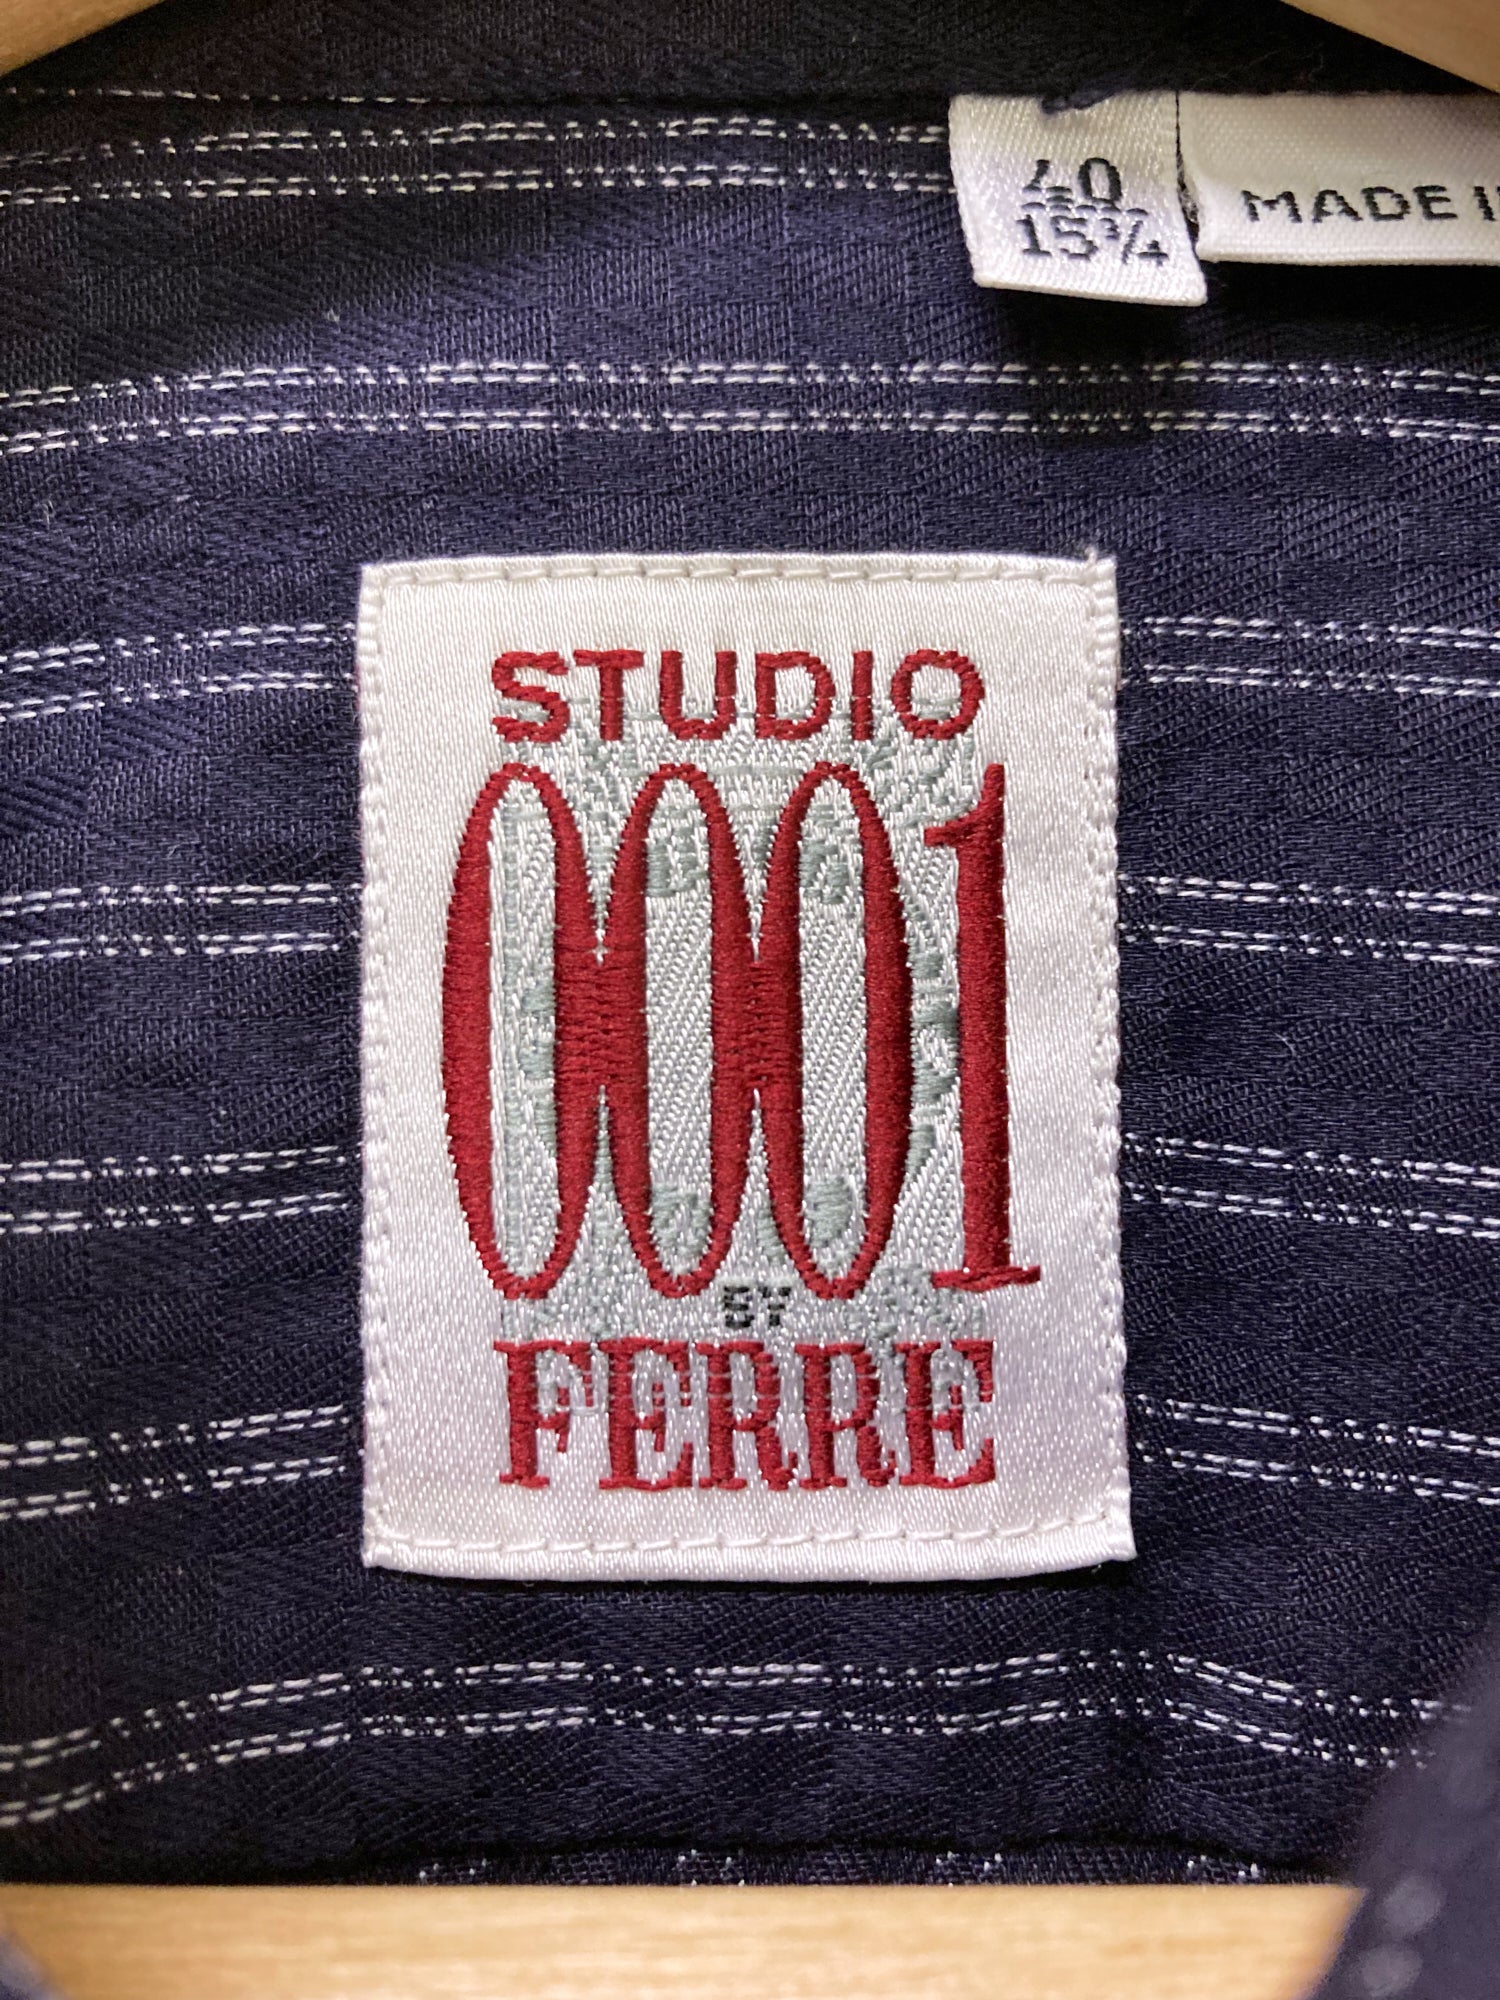 Studio 0001 by Gianfranco Ferre dark blue striped cotton shirt - size 40 M